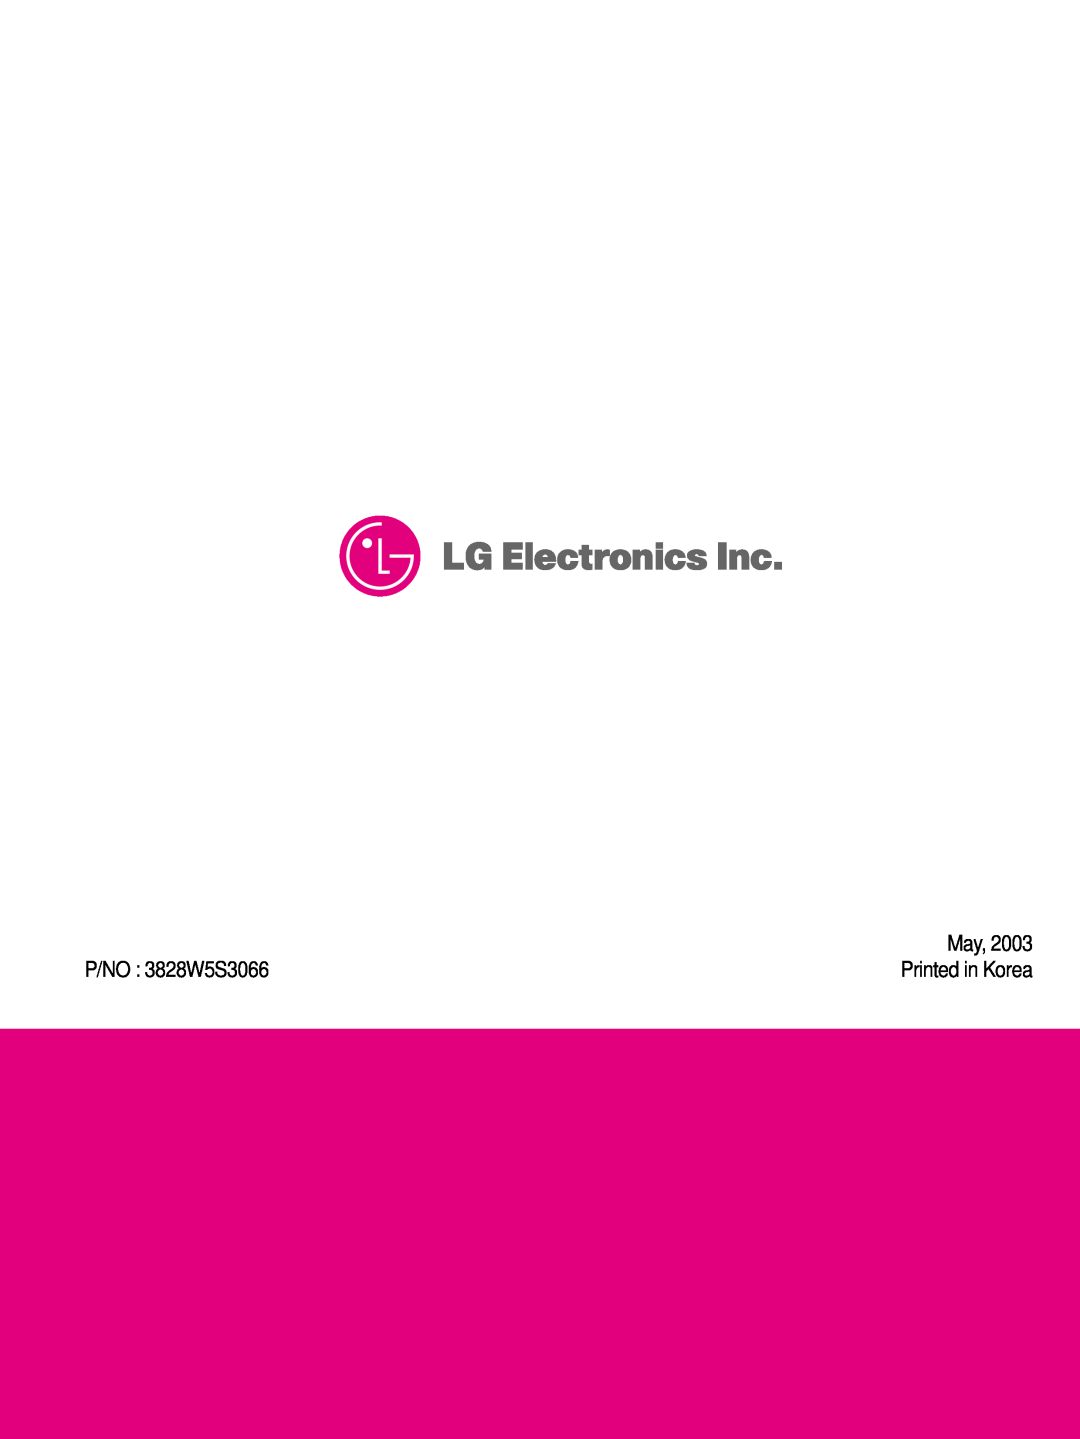 LG Electronics LRMM1430SW, LRMM1430SB manual P/NO 3828W5S3066, Printed in Korea 